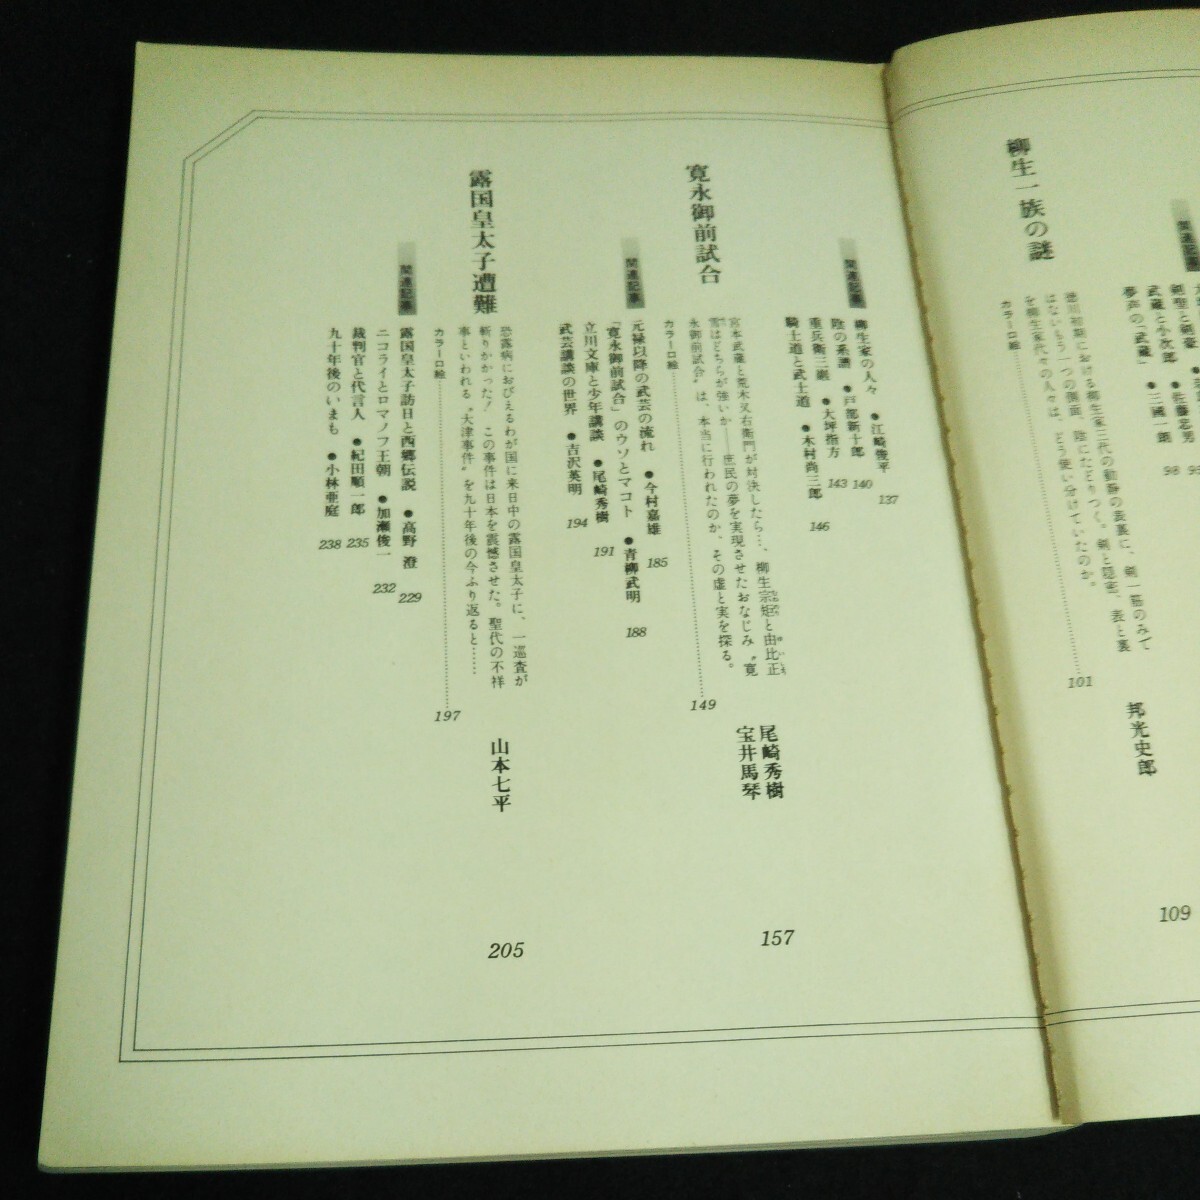 e-054 歴史への招待 ④ 日本放送出版協会 昭和57年第8刷発行※14_ページわれあり